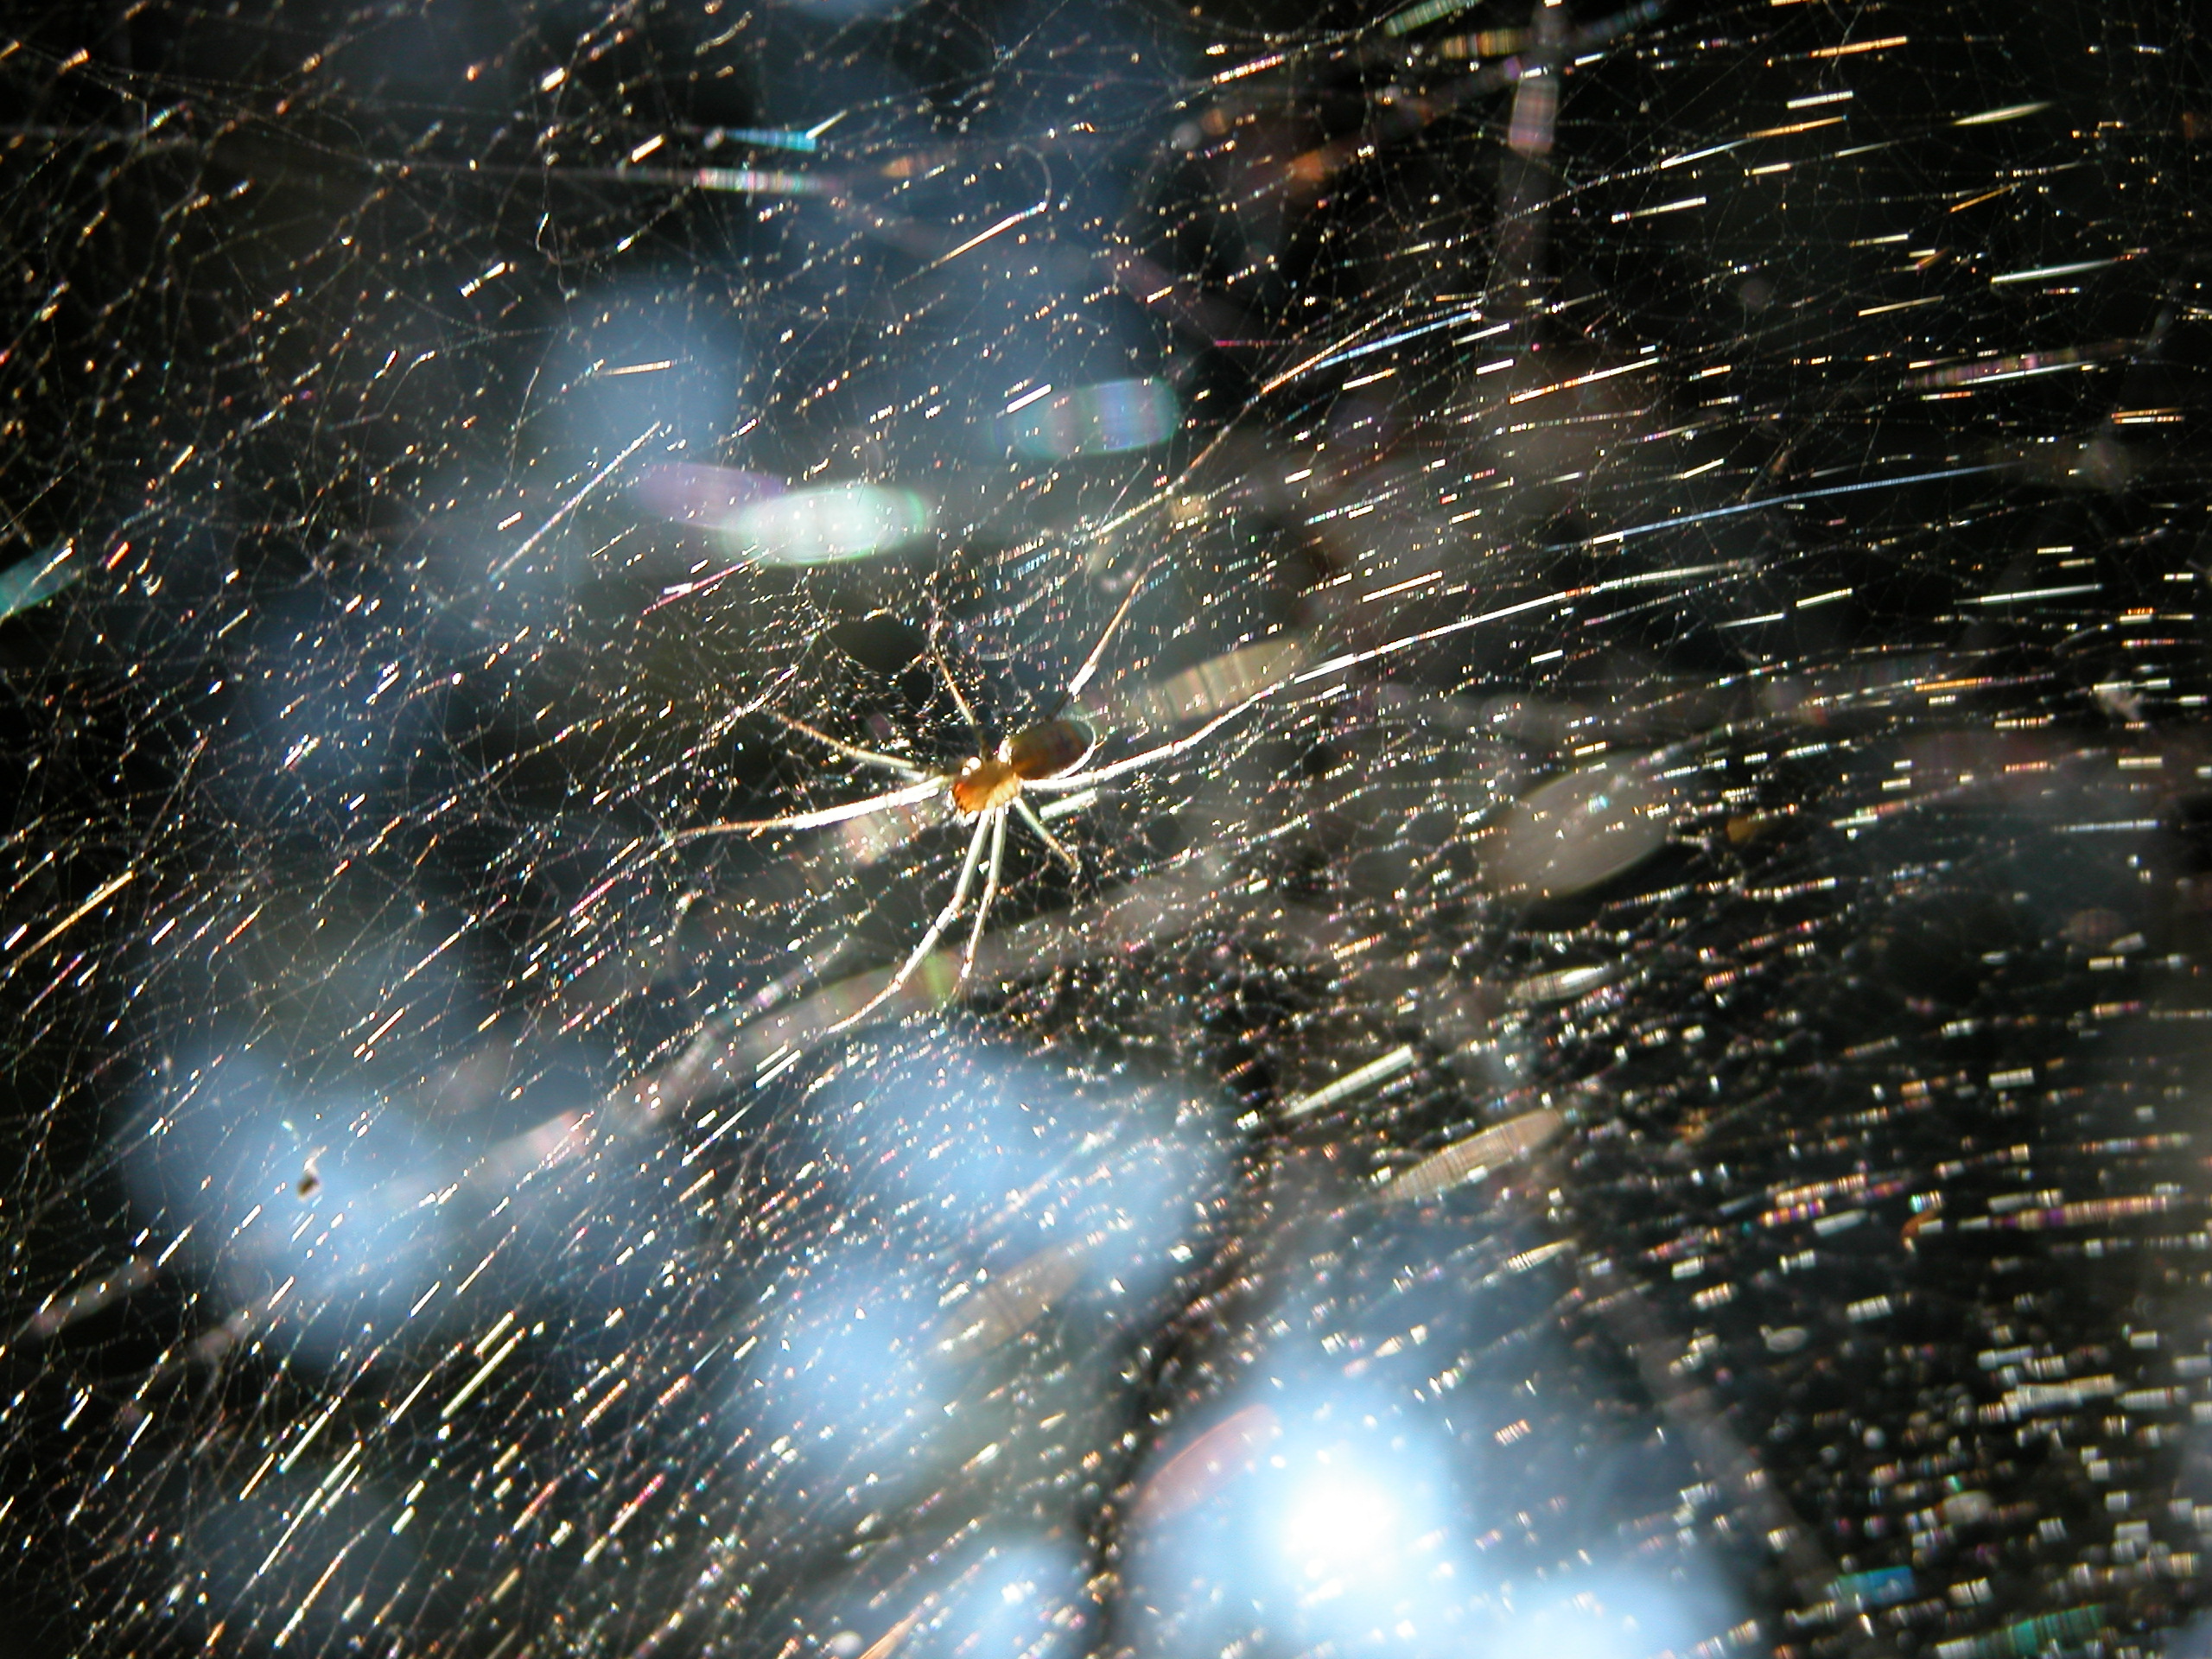 nature animals insects web cobweb spider spiderweb